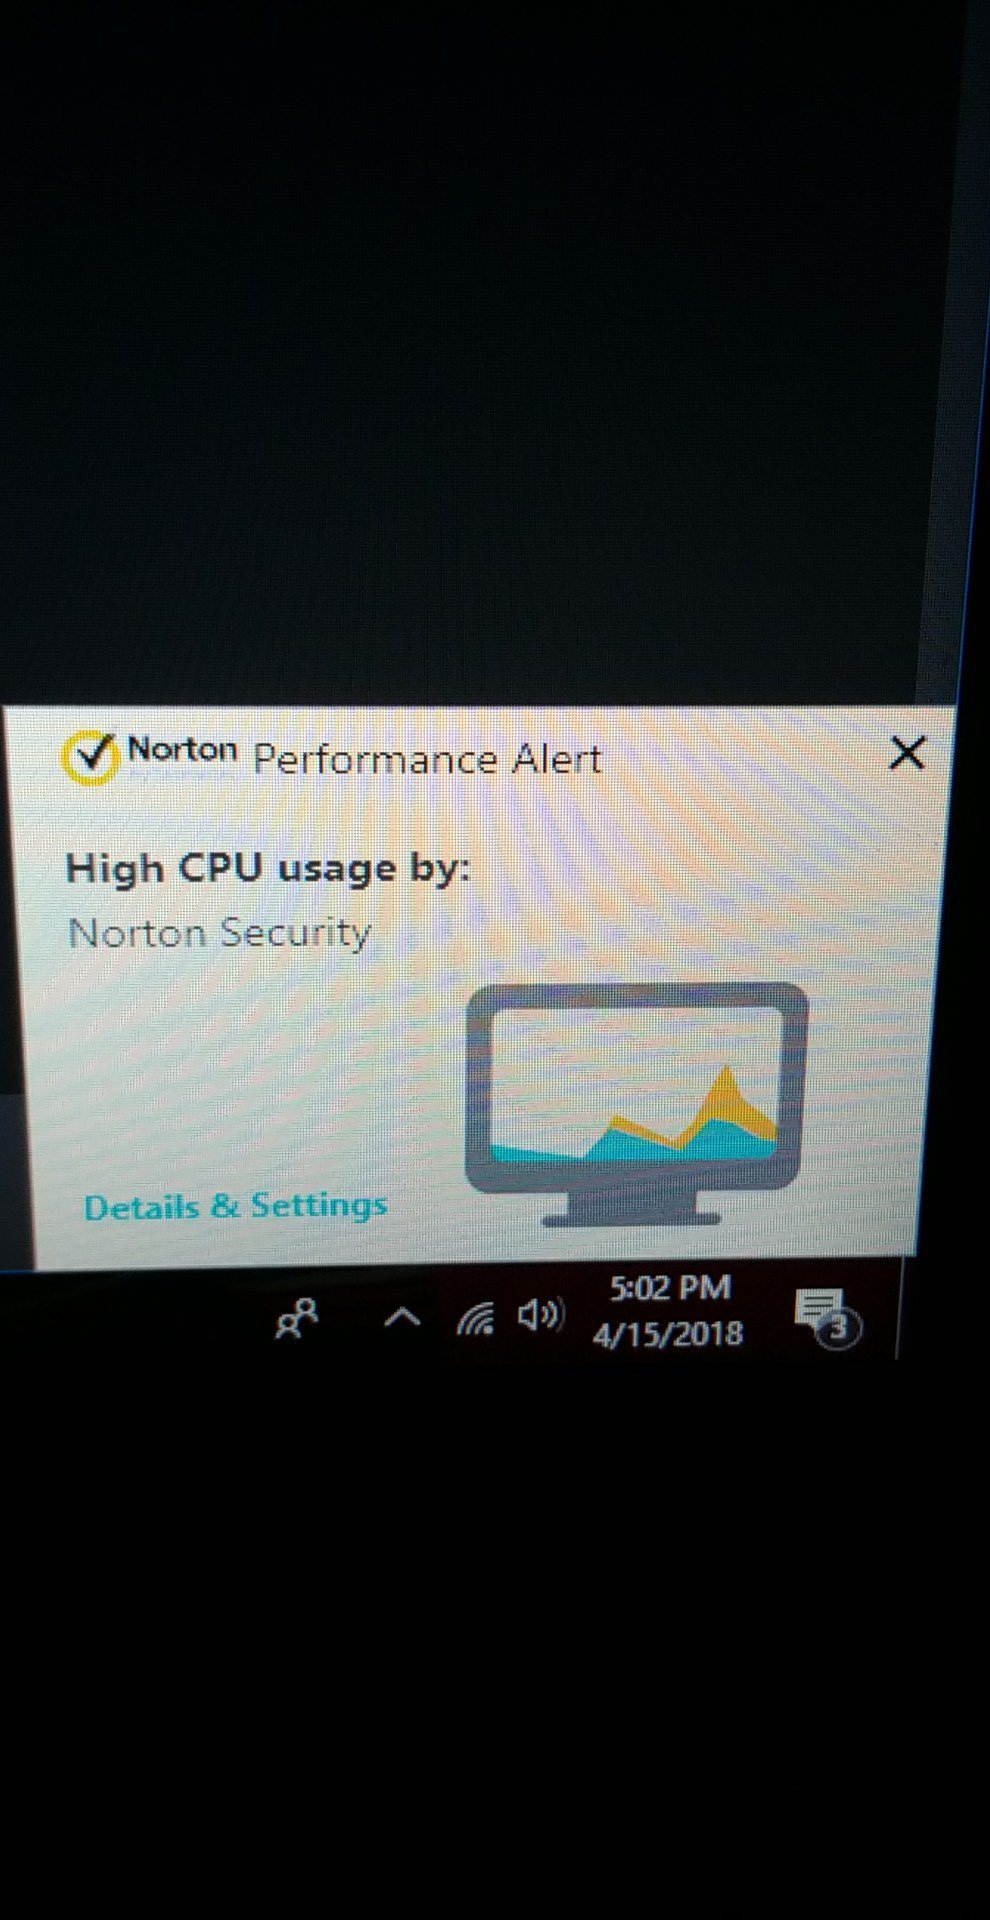 norton security memes - Norton Performance Alert High Cpu usage by Norton Security Details & Settings O ~ 4 4152018